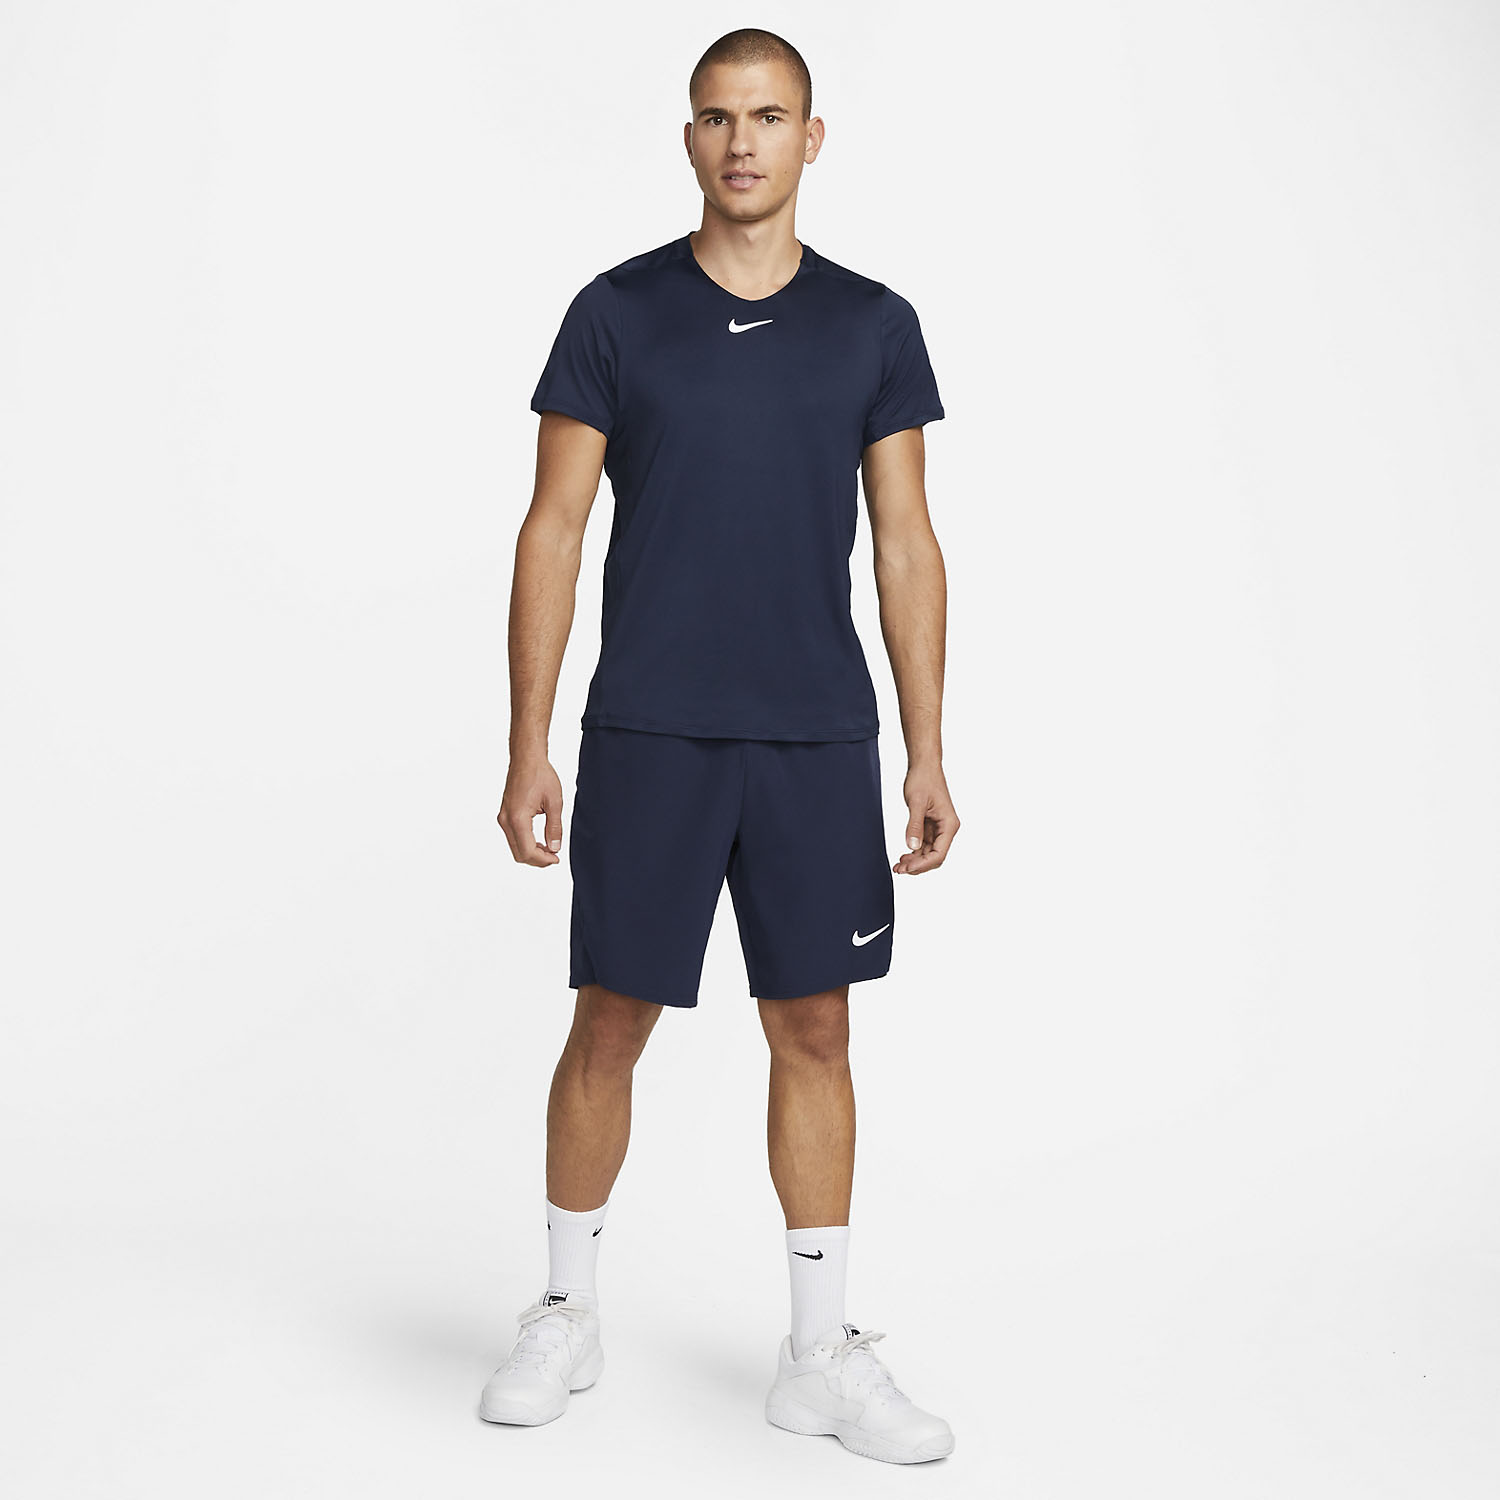 Nike Dri-FIT Advantage T-Shirt - Obsidian/White